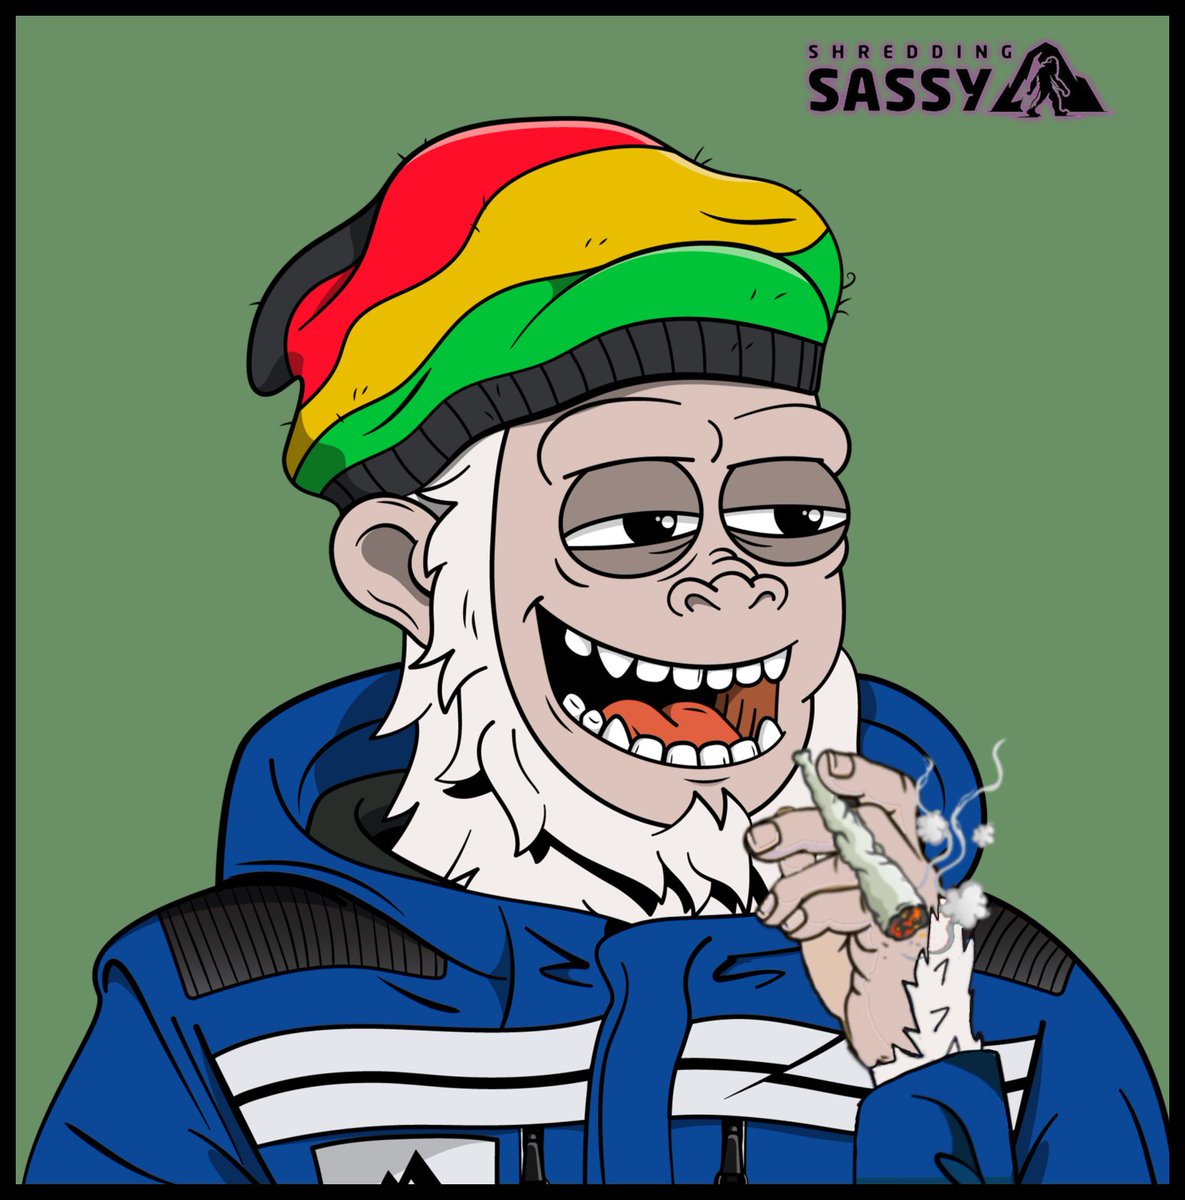 Wen someone asks me if I want to smoke 

#StaySassy